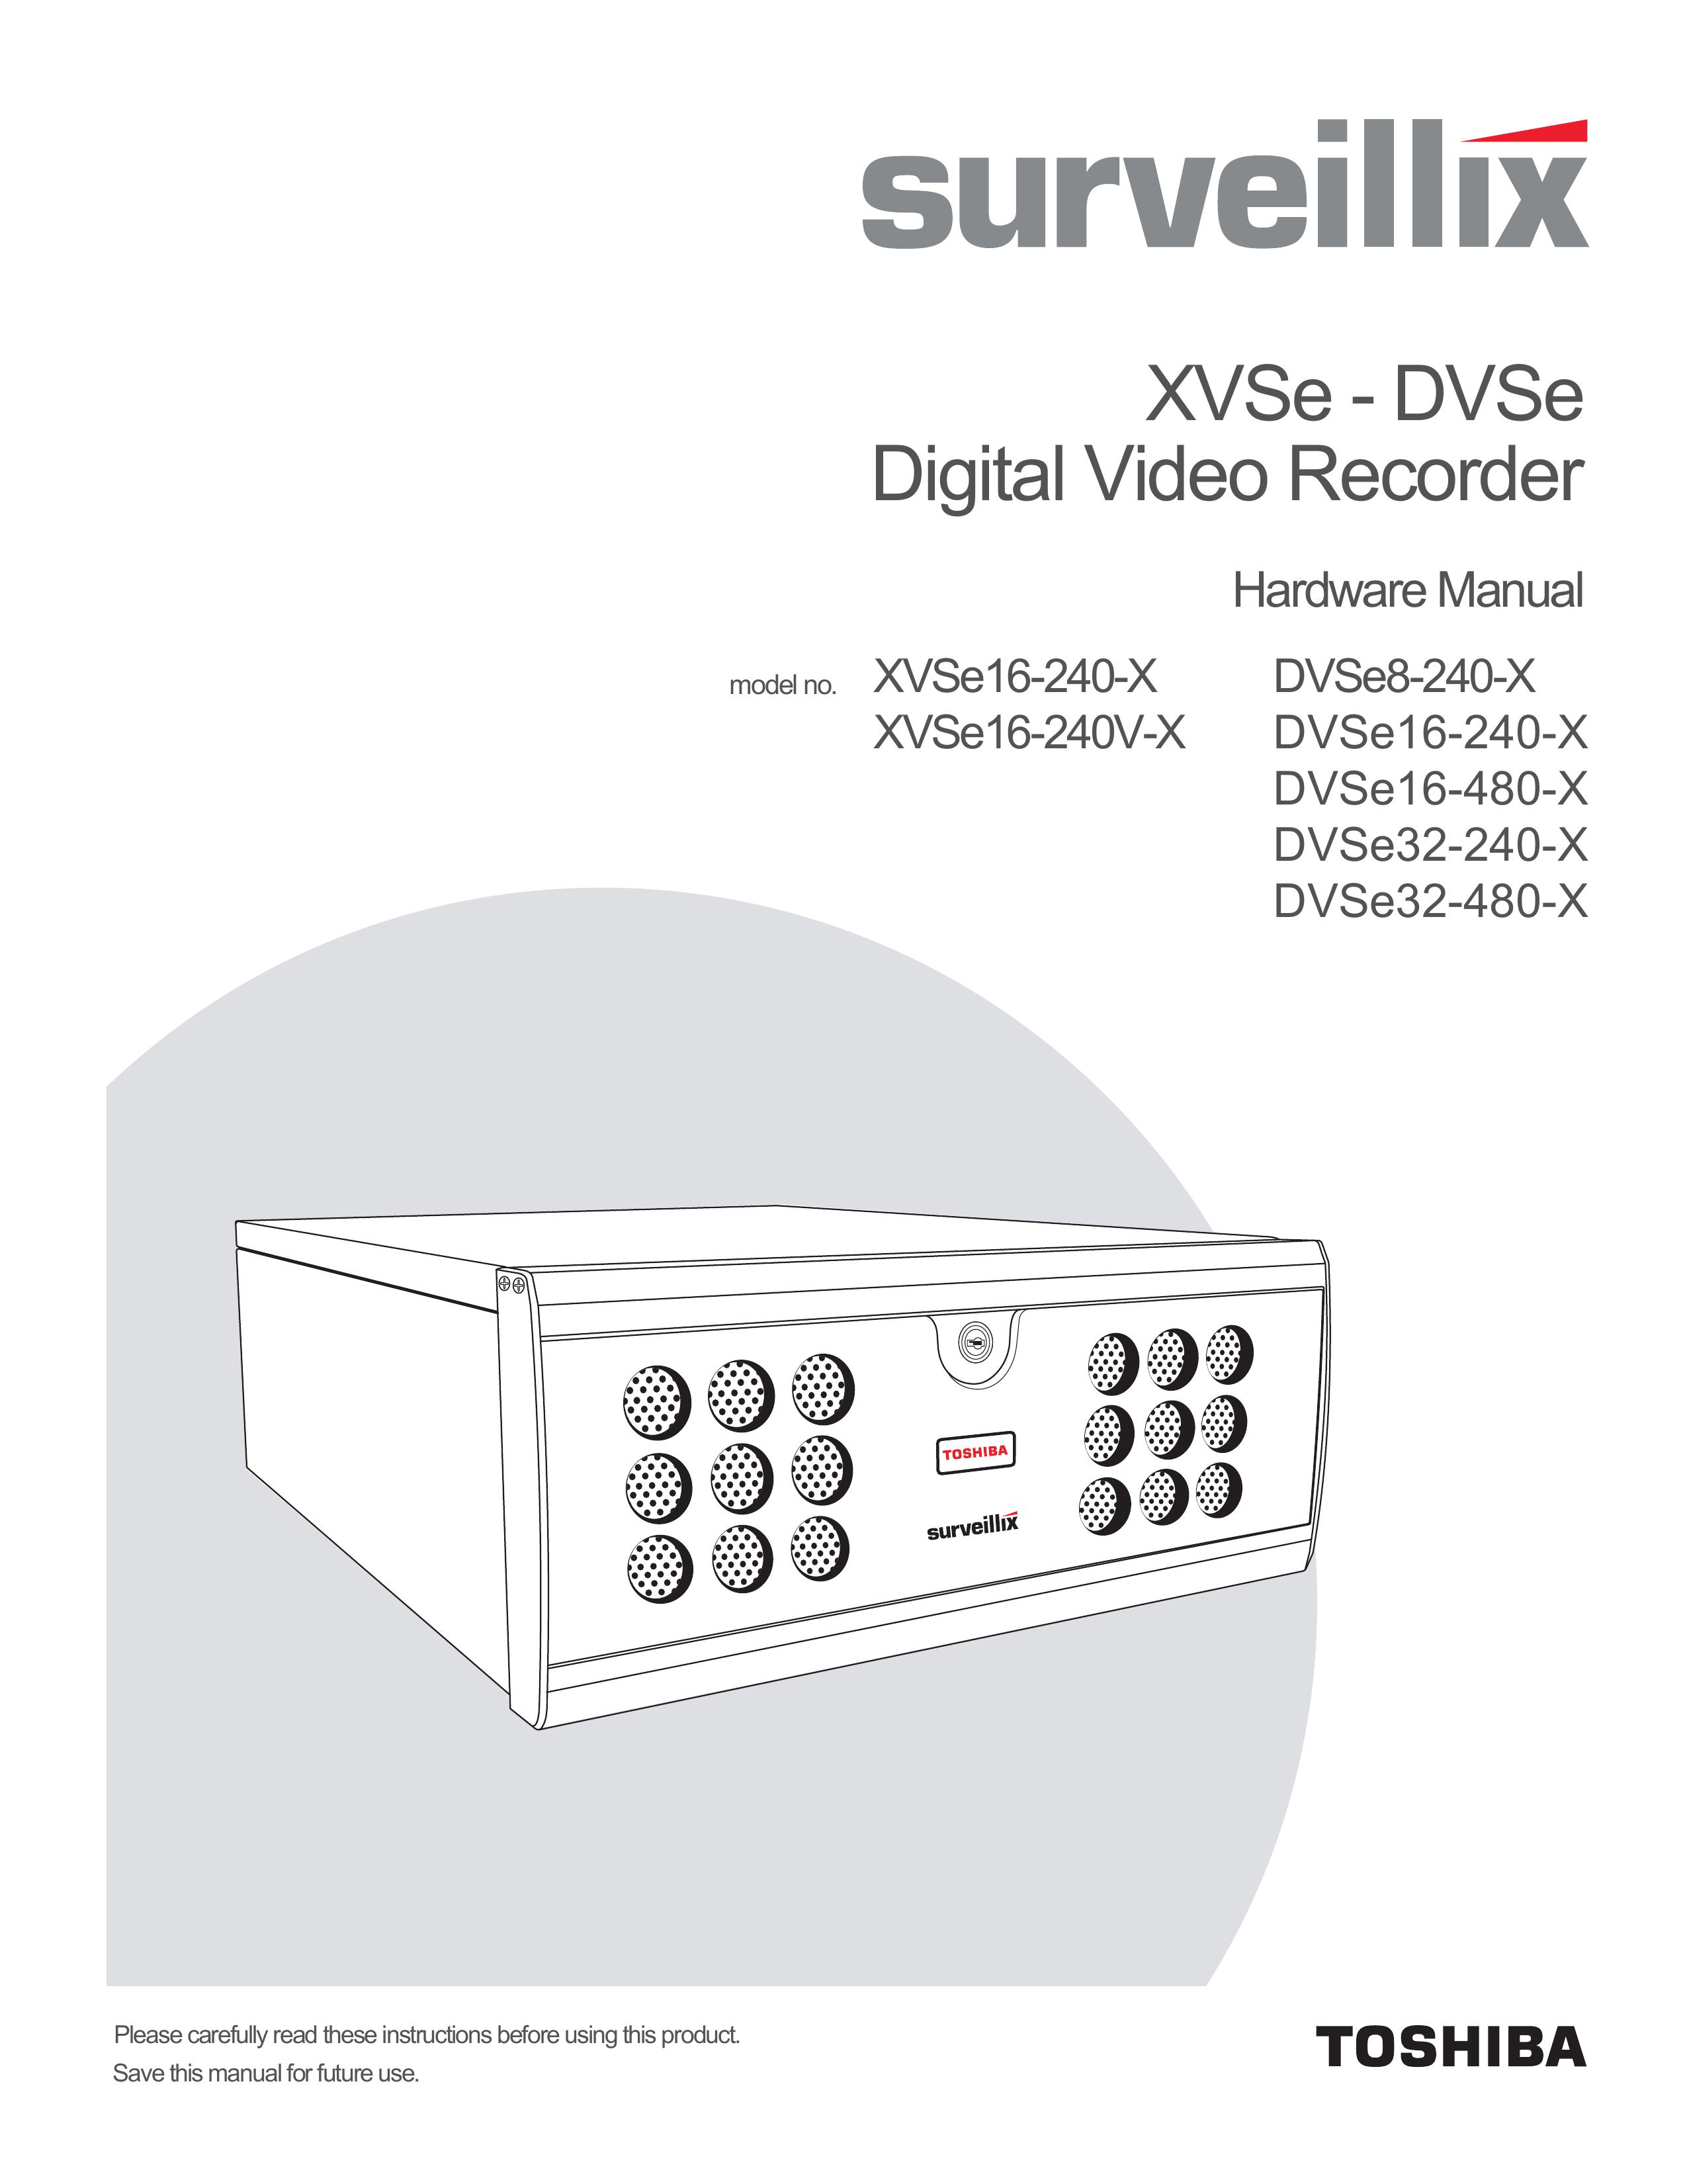 Toshiba DVSe32-240-X Digital Photo Keychain User Manual